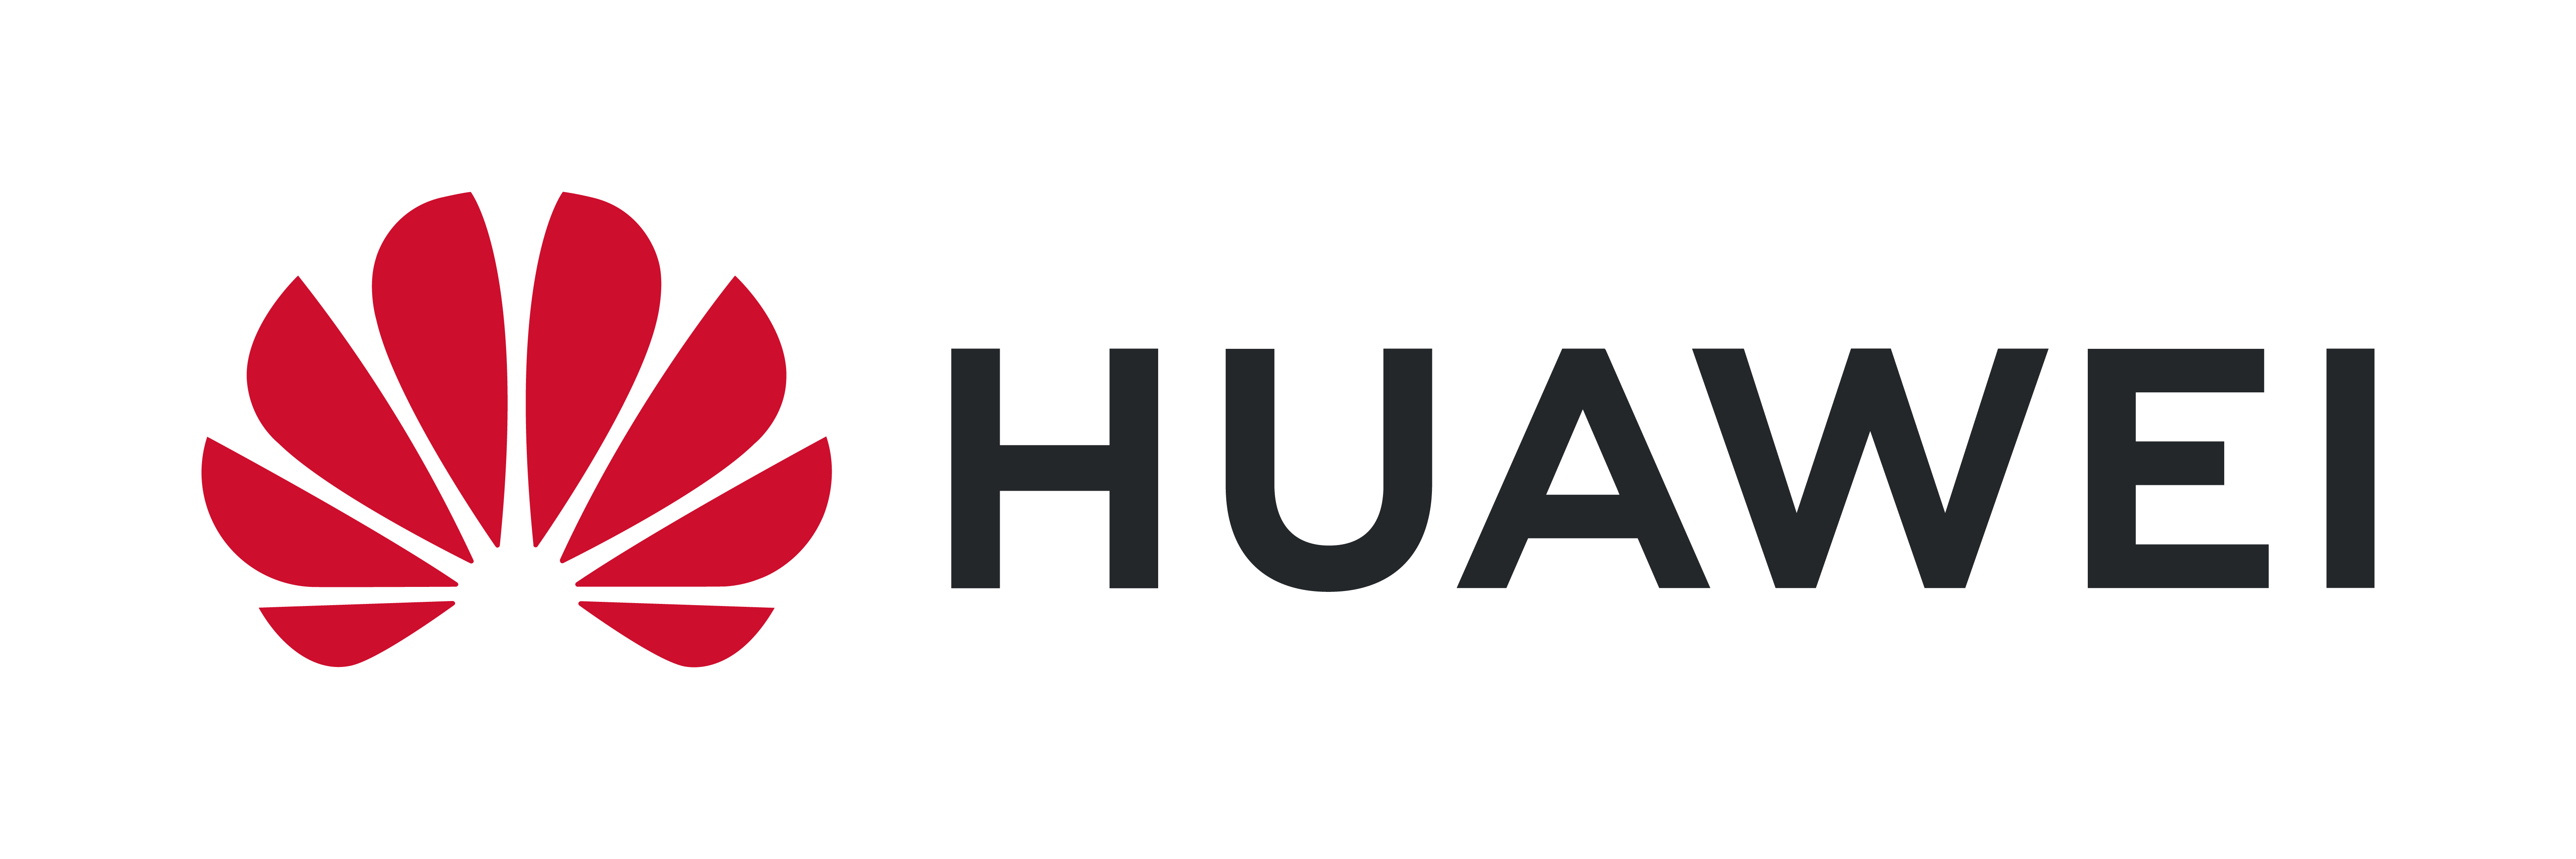 Huawei-brandlogo-100-2021